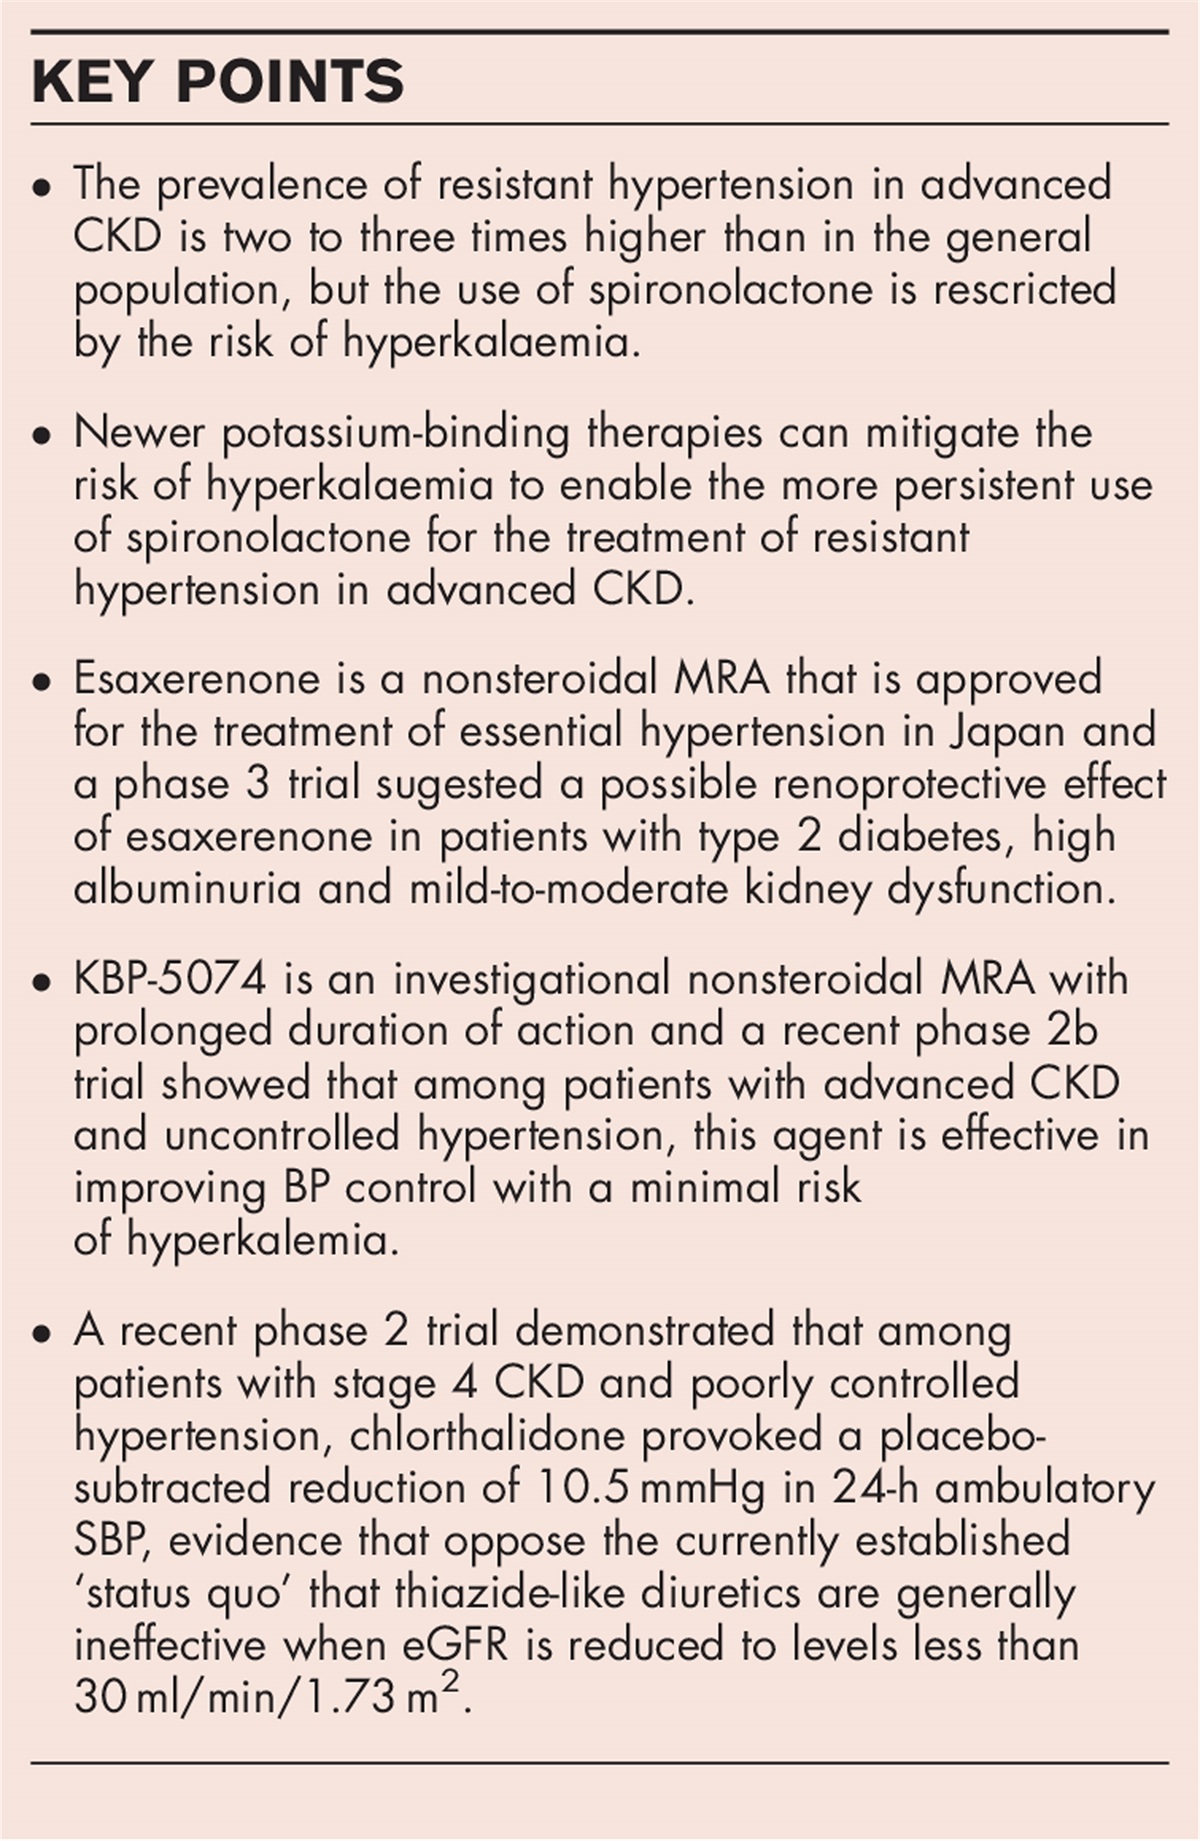 Management of hypertension in advanced kidney disease